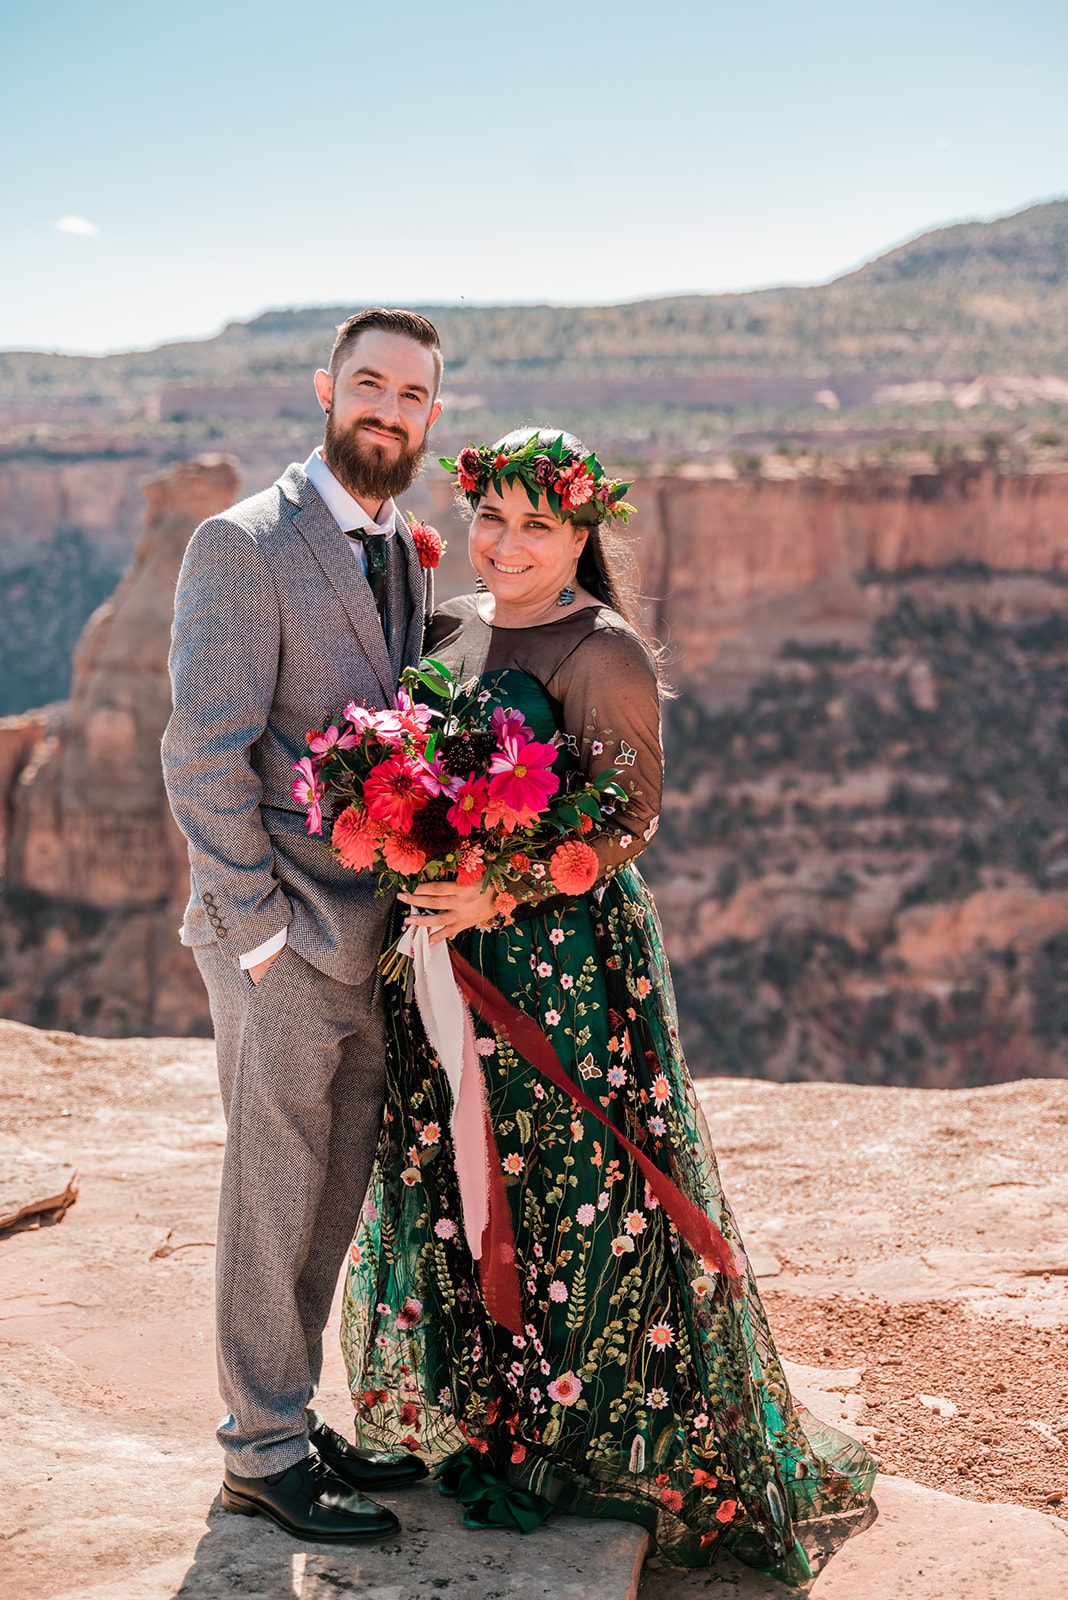 Non-traditional wedding dress inspiration from Amanda Matilda | Colorado Elopement Photographer